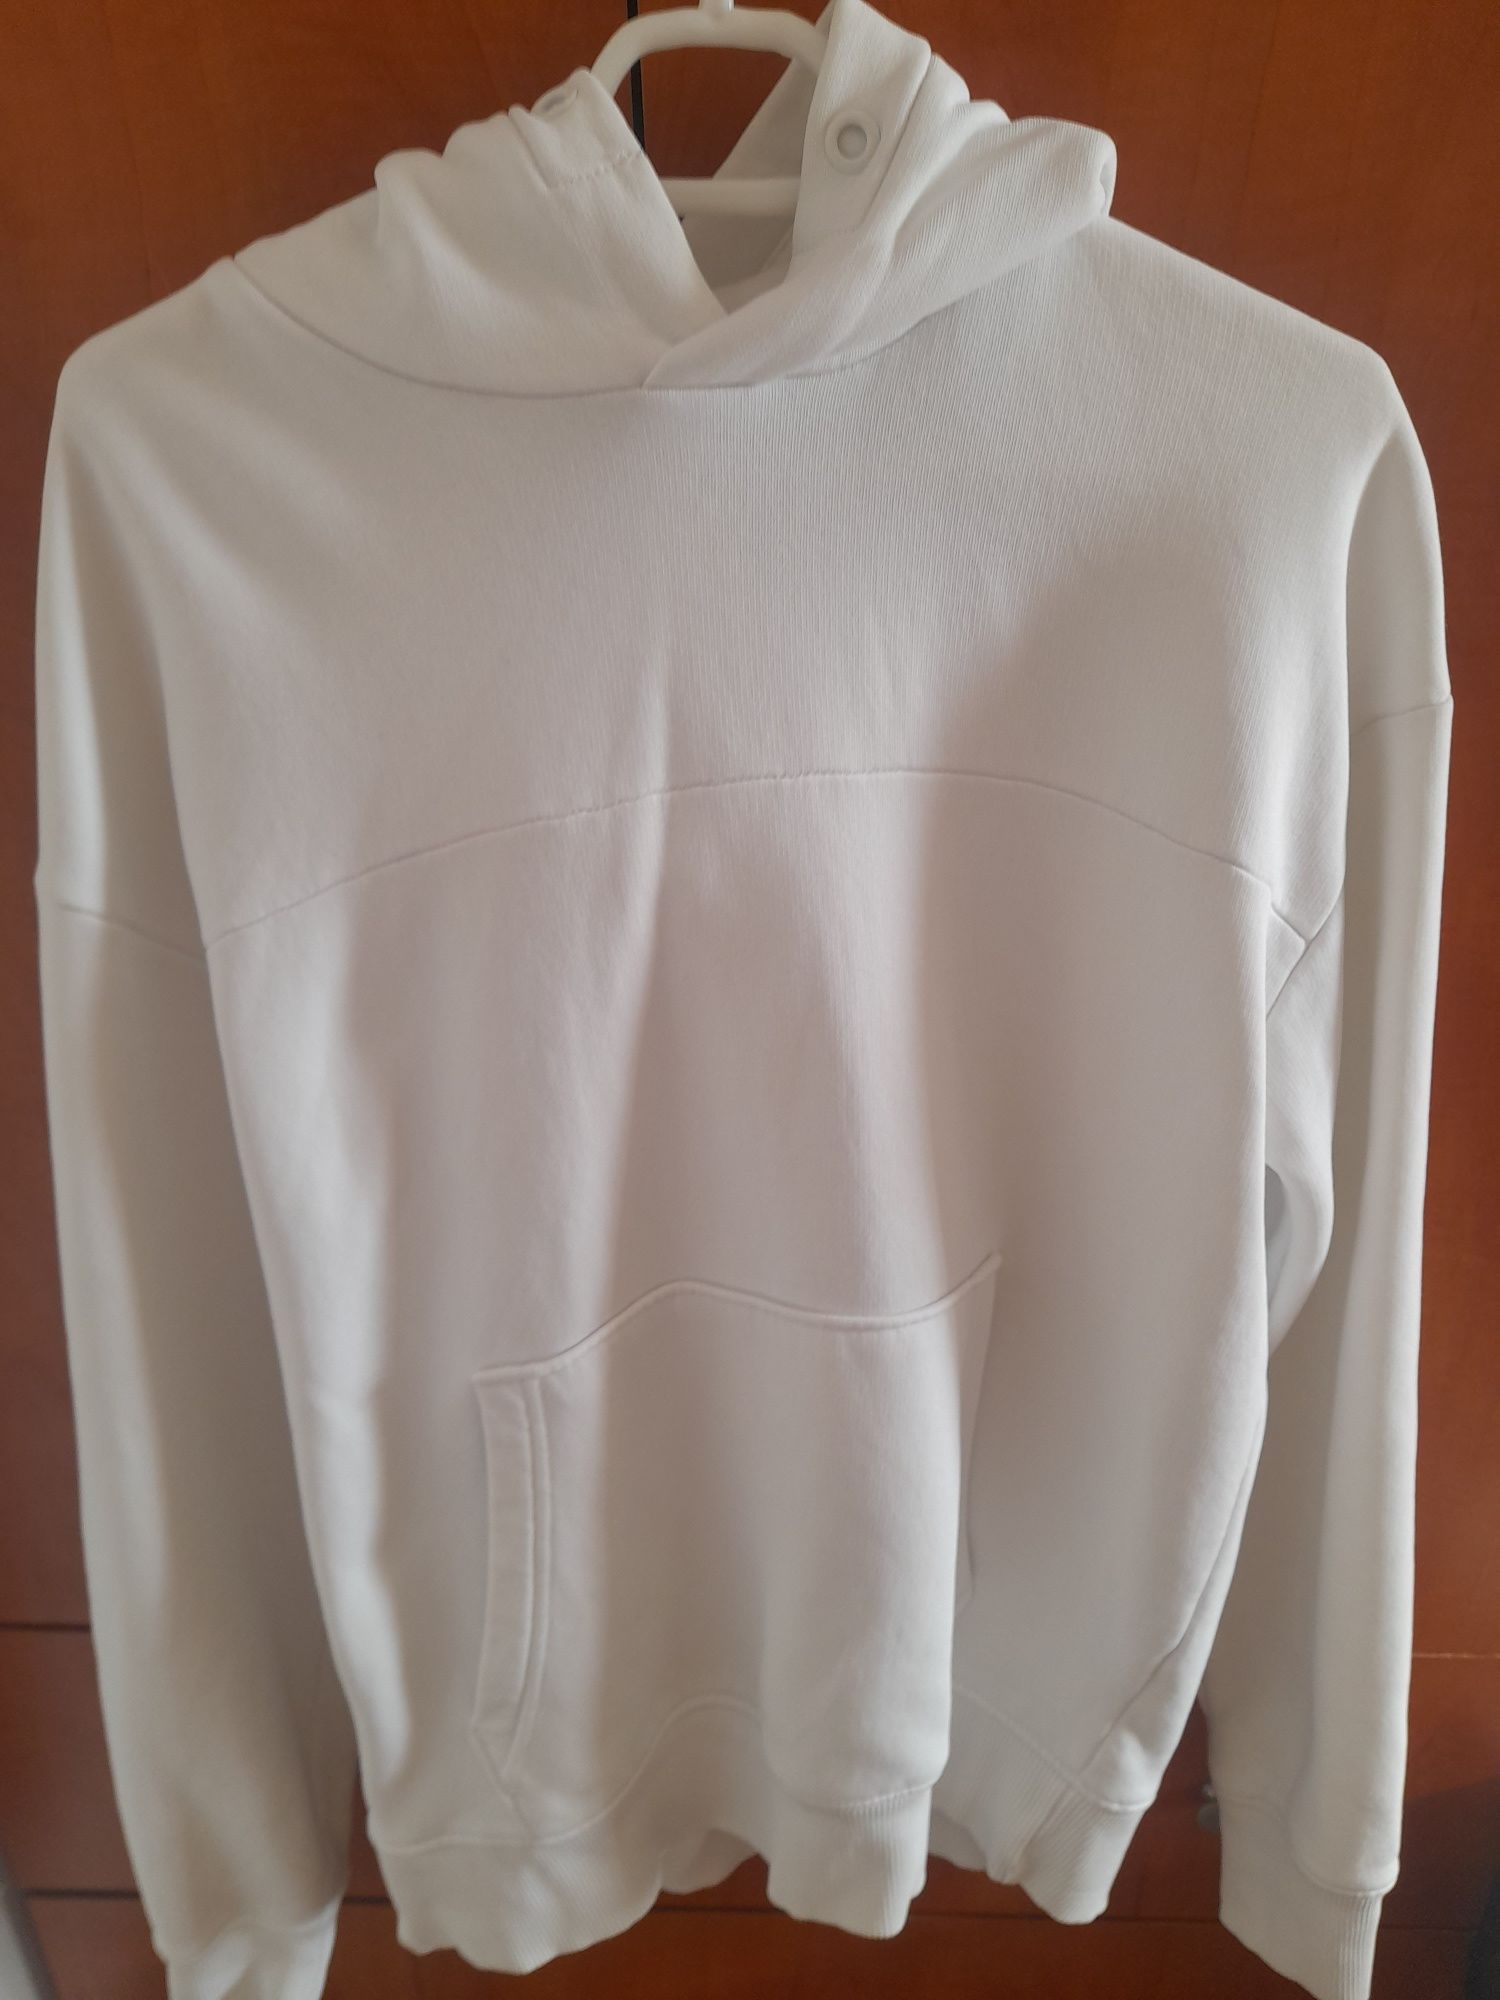 Hanorac alb zara&pull&beat-hoodie alb nike jordan adidas bluza alba